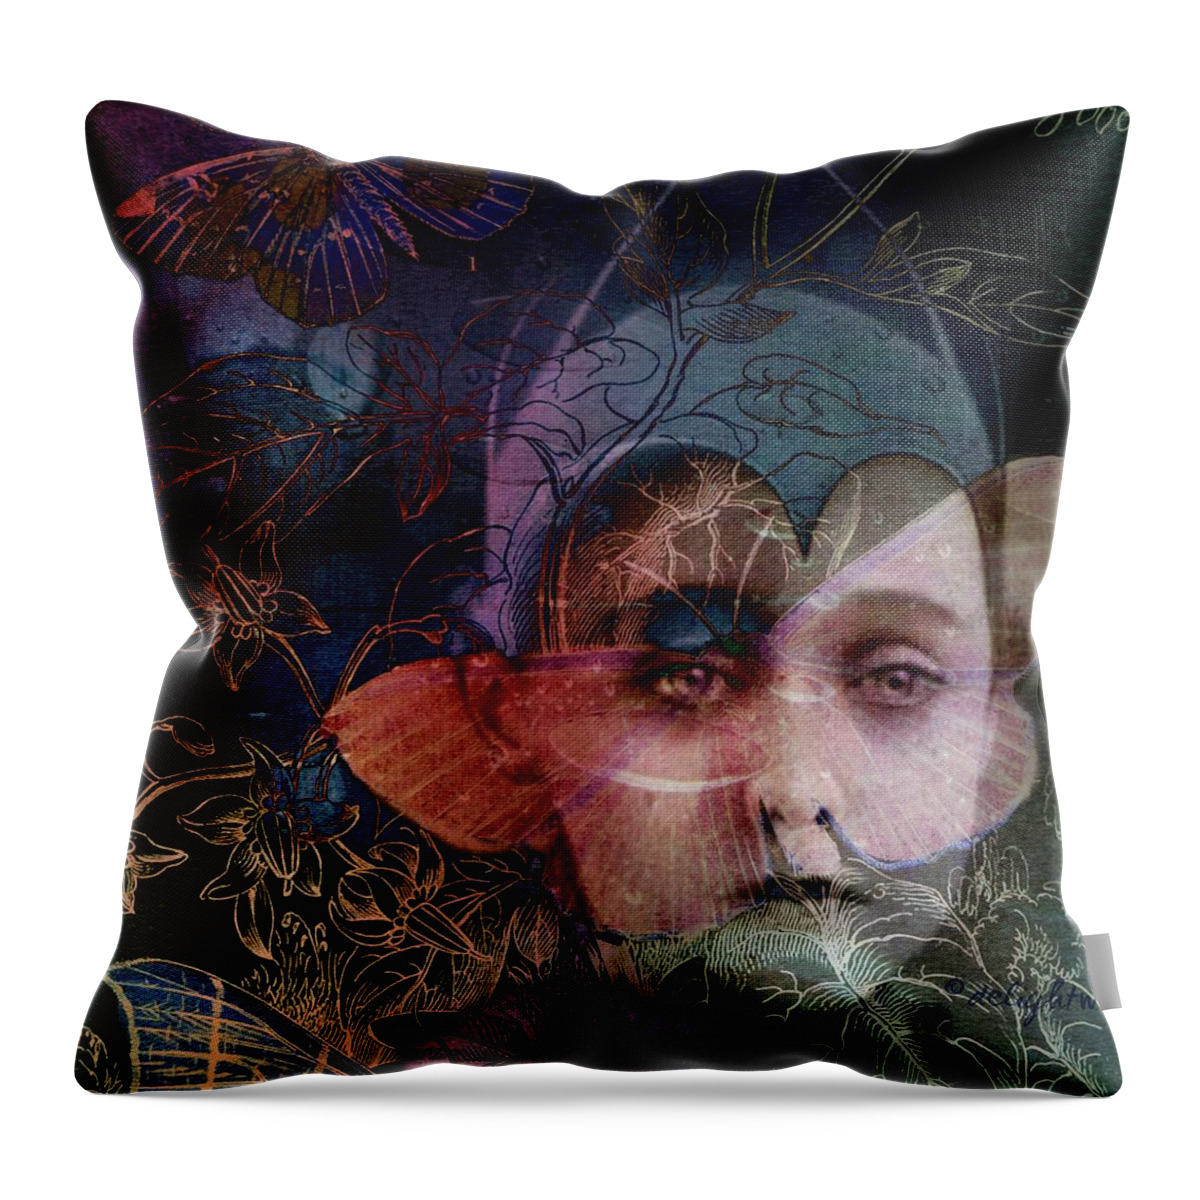 Dark Art Throw Pillow featuring the digital art Solaris by Delight Worthyn